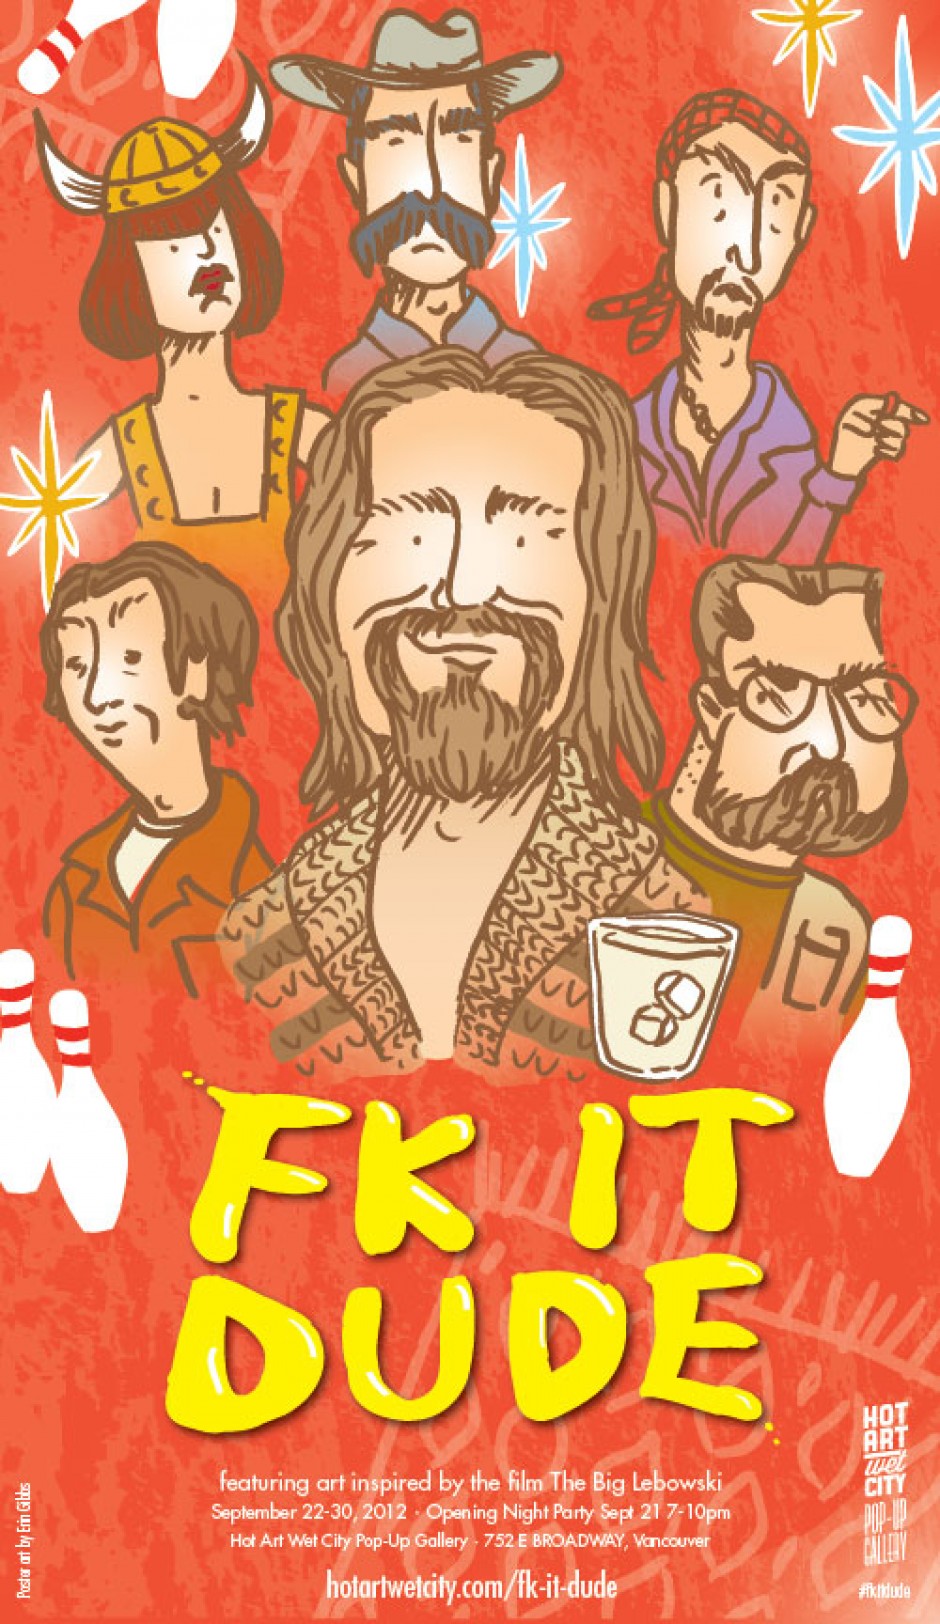 Fk It Dude - poster art by Erin Gibbs